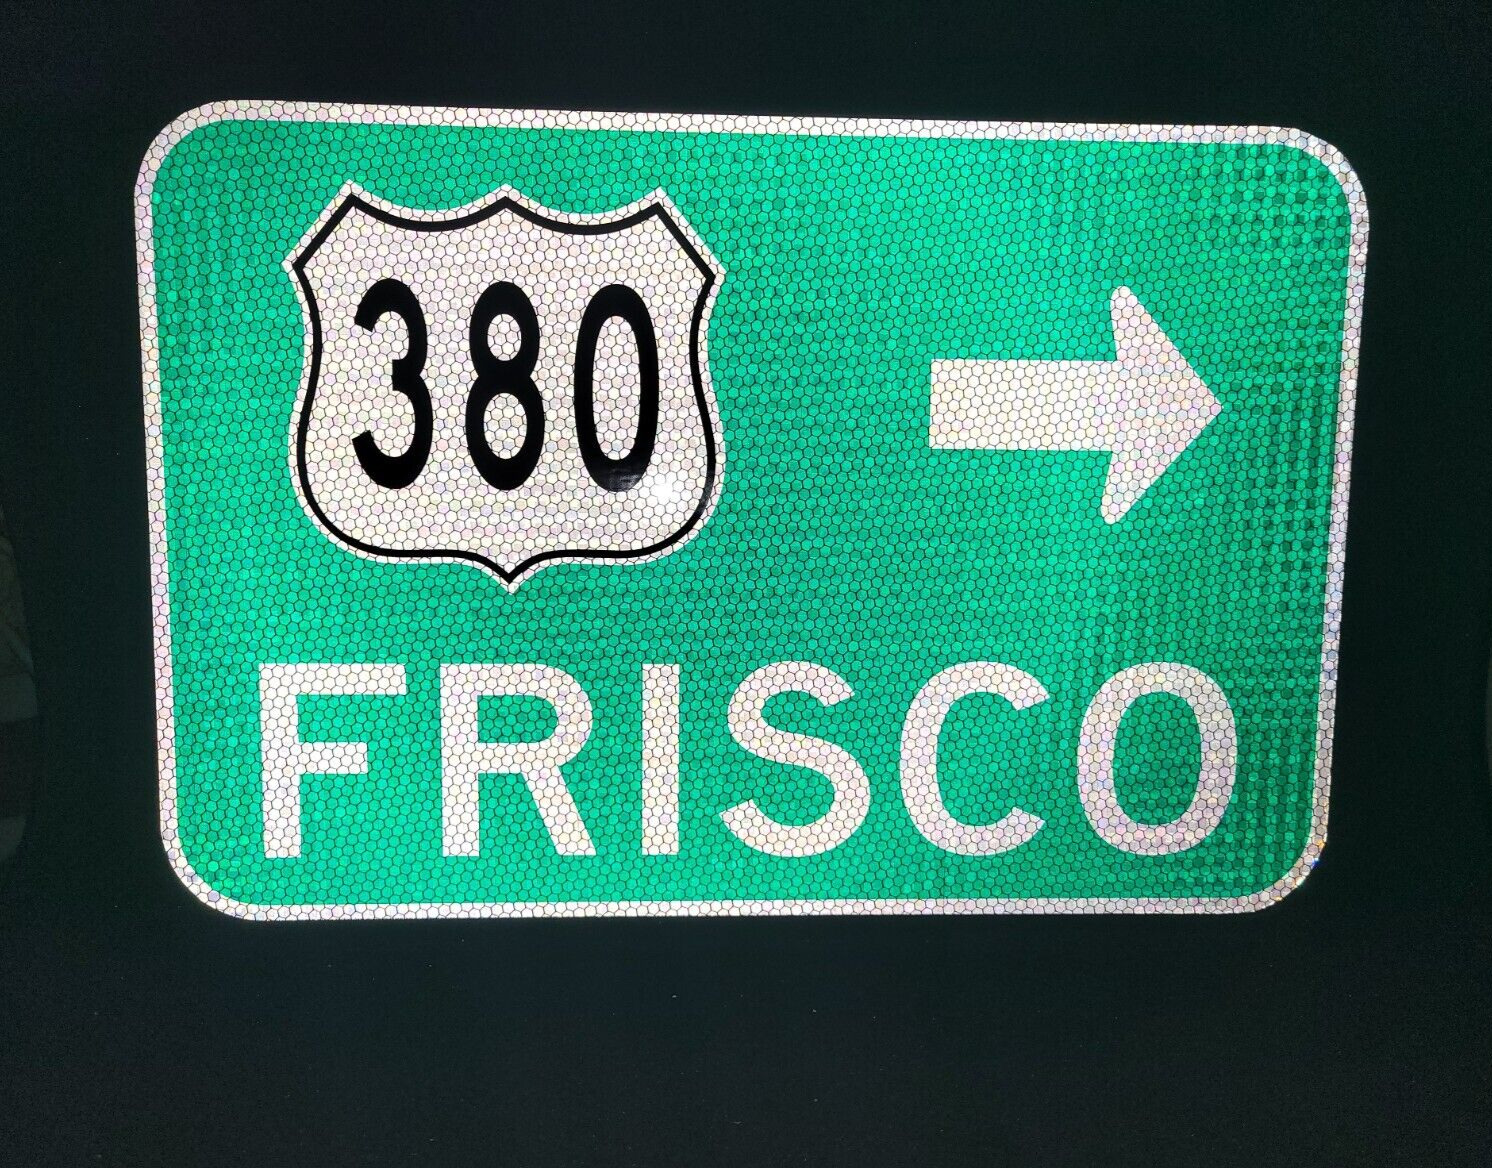 FRISCO US ROUTE 380 road sign, Texas, Dallas, Denton, Plano, Garland, Irving